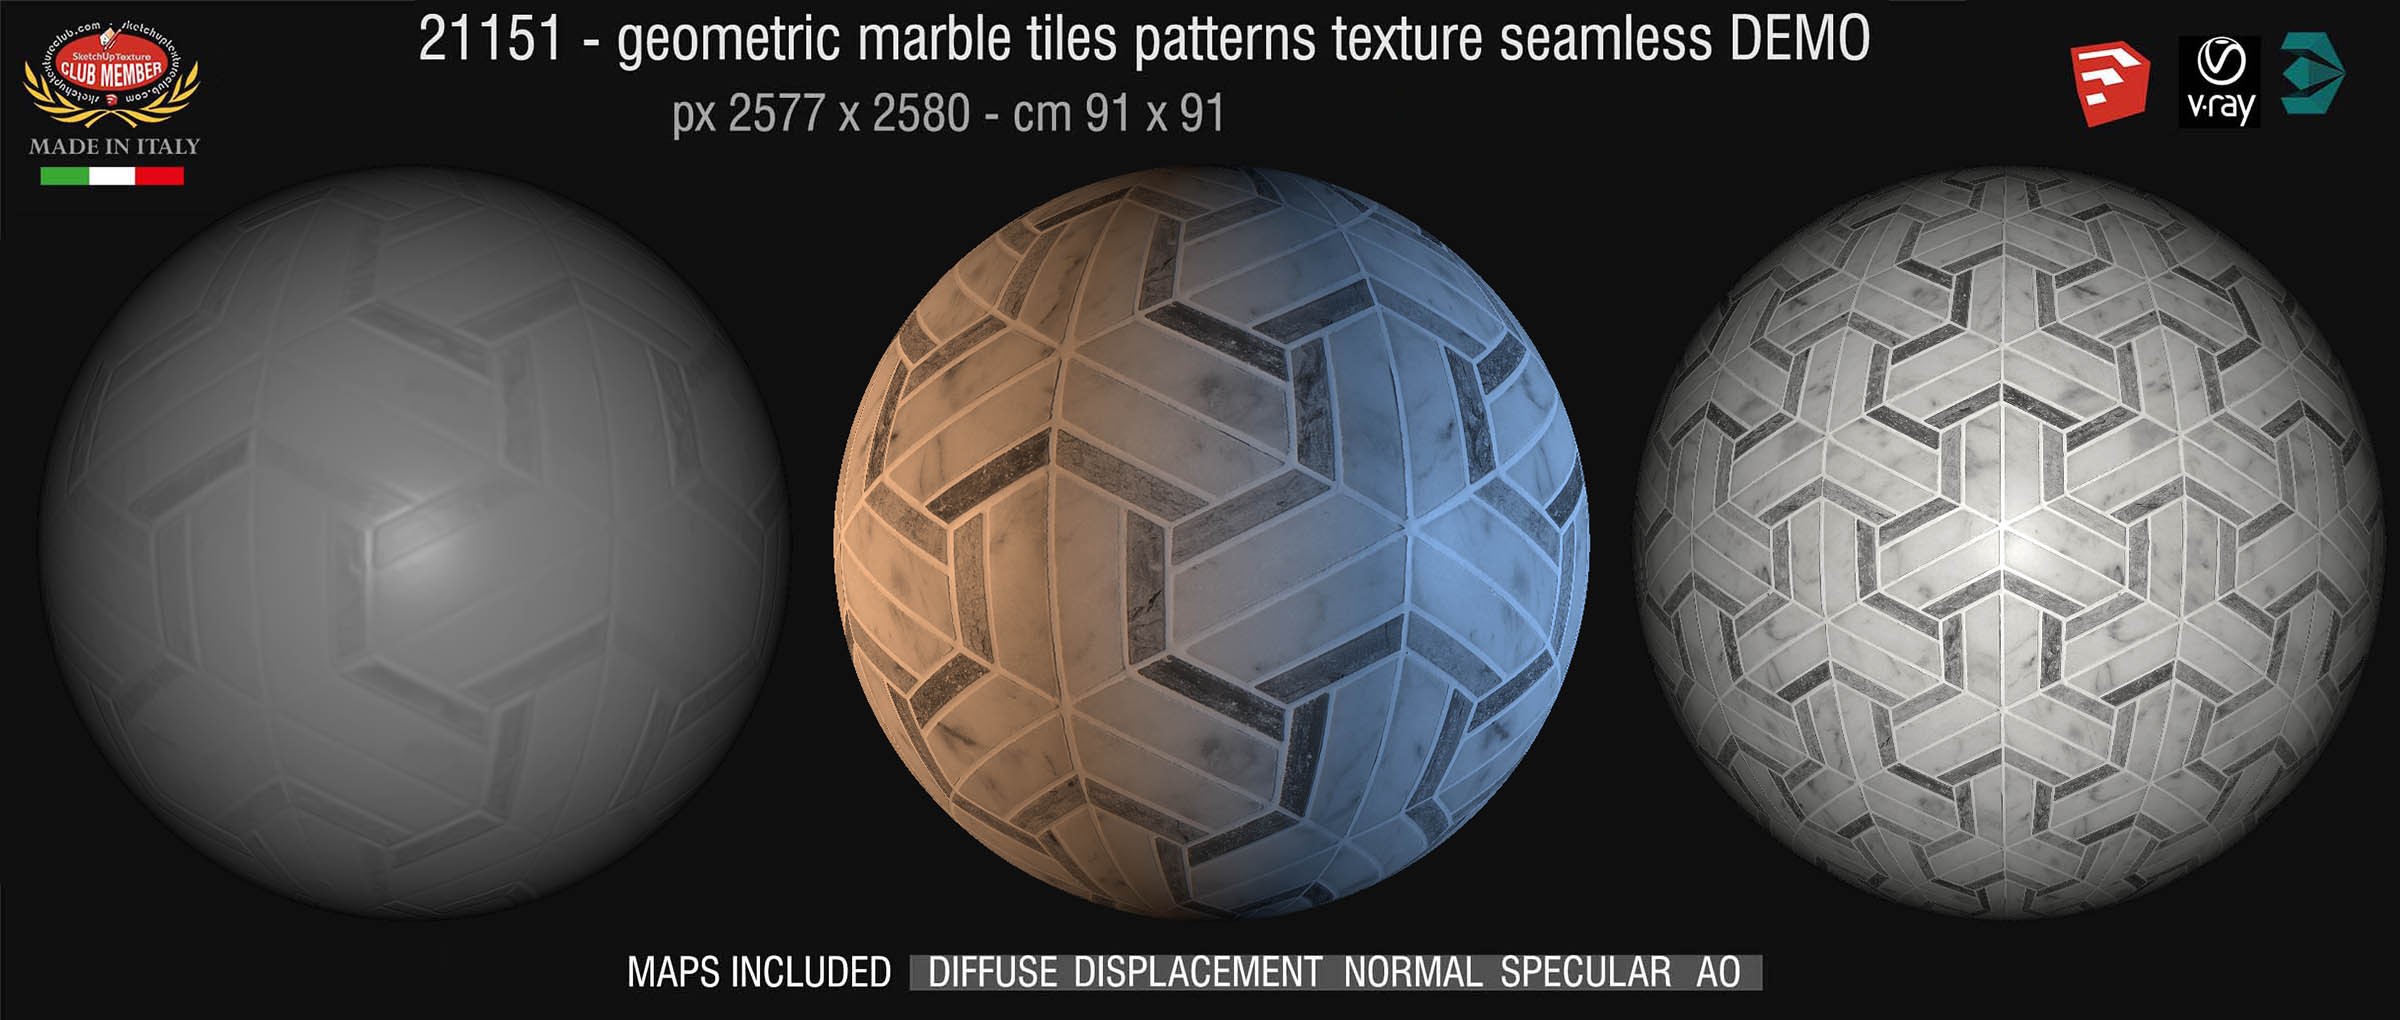 Geometric marble tiles patterns texture seamless 21151